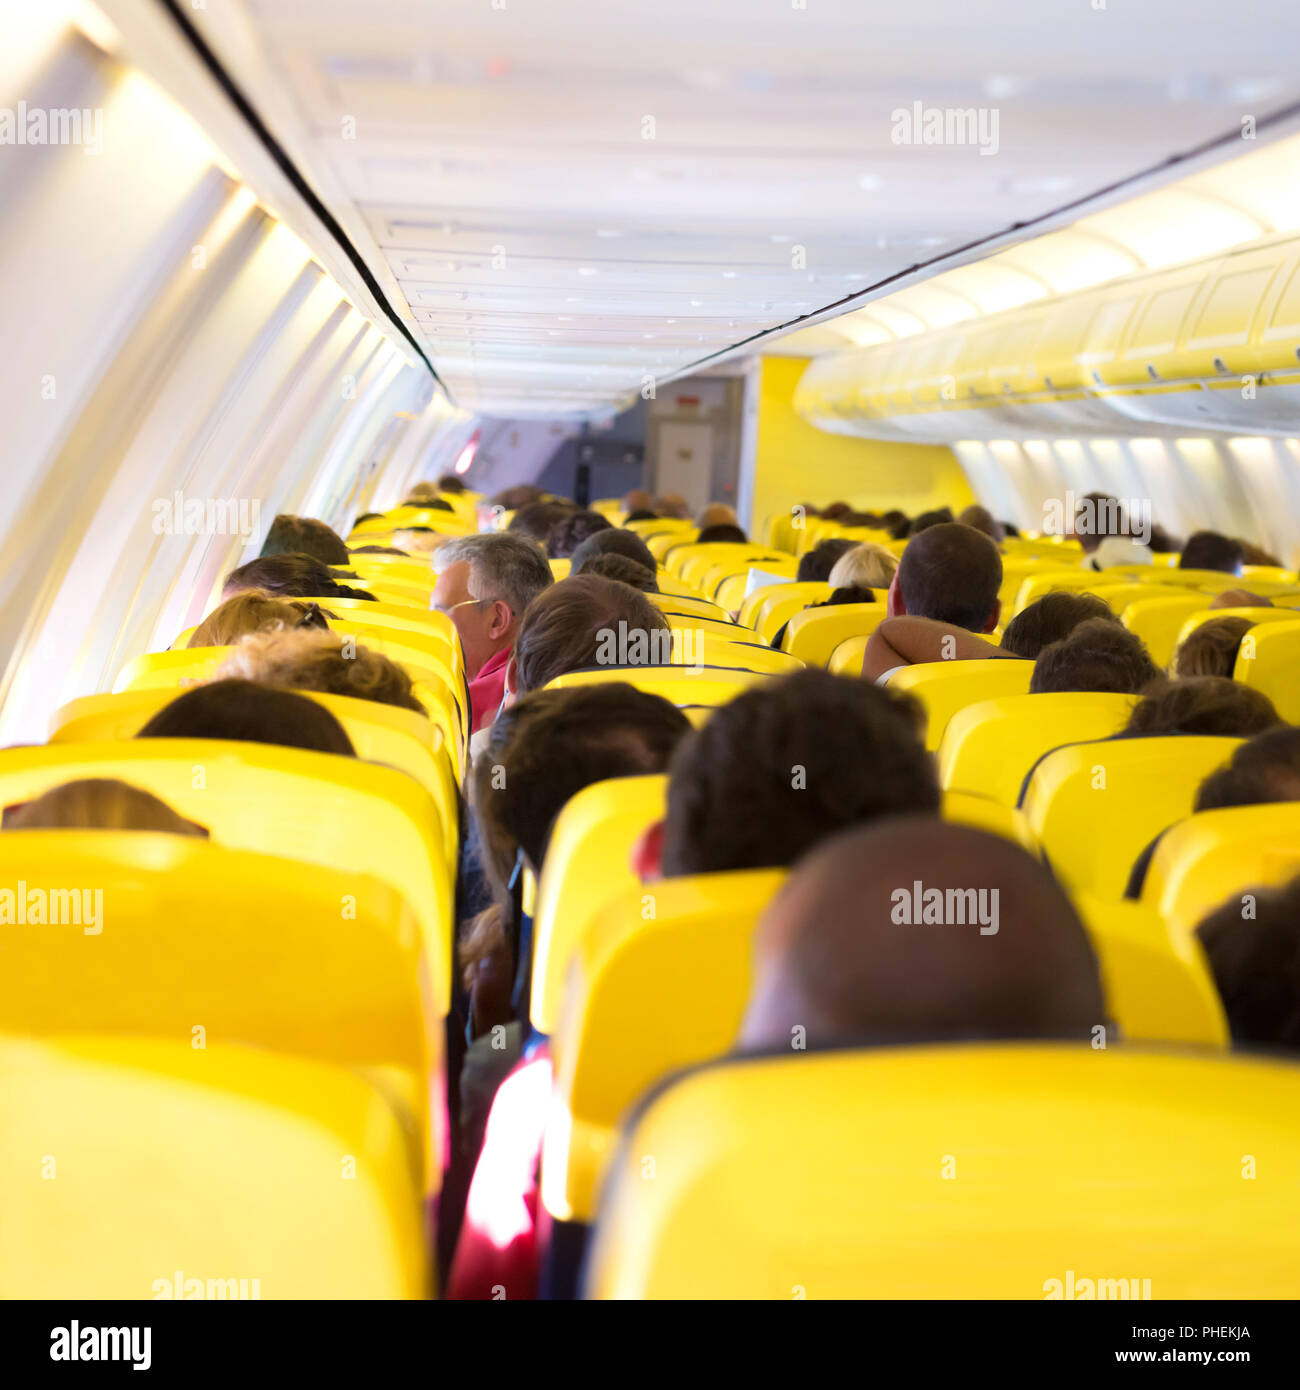 Aisle inside a plane Stock Photo